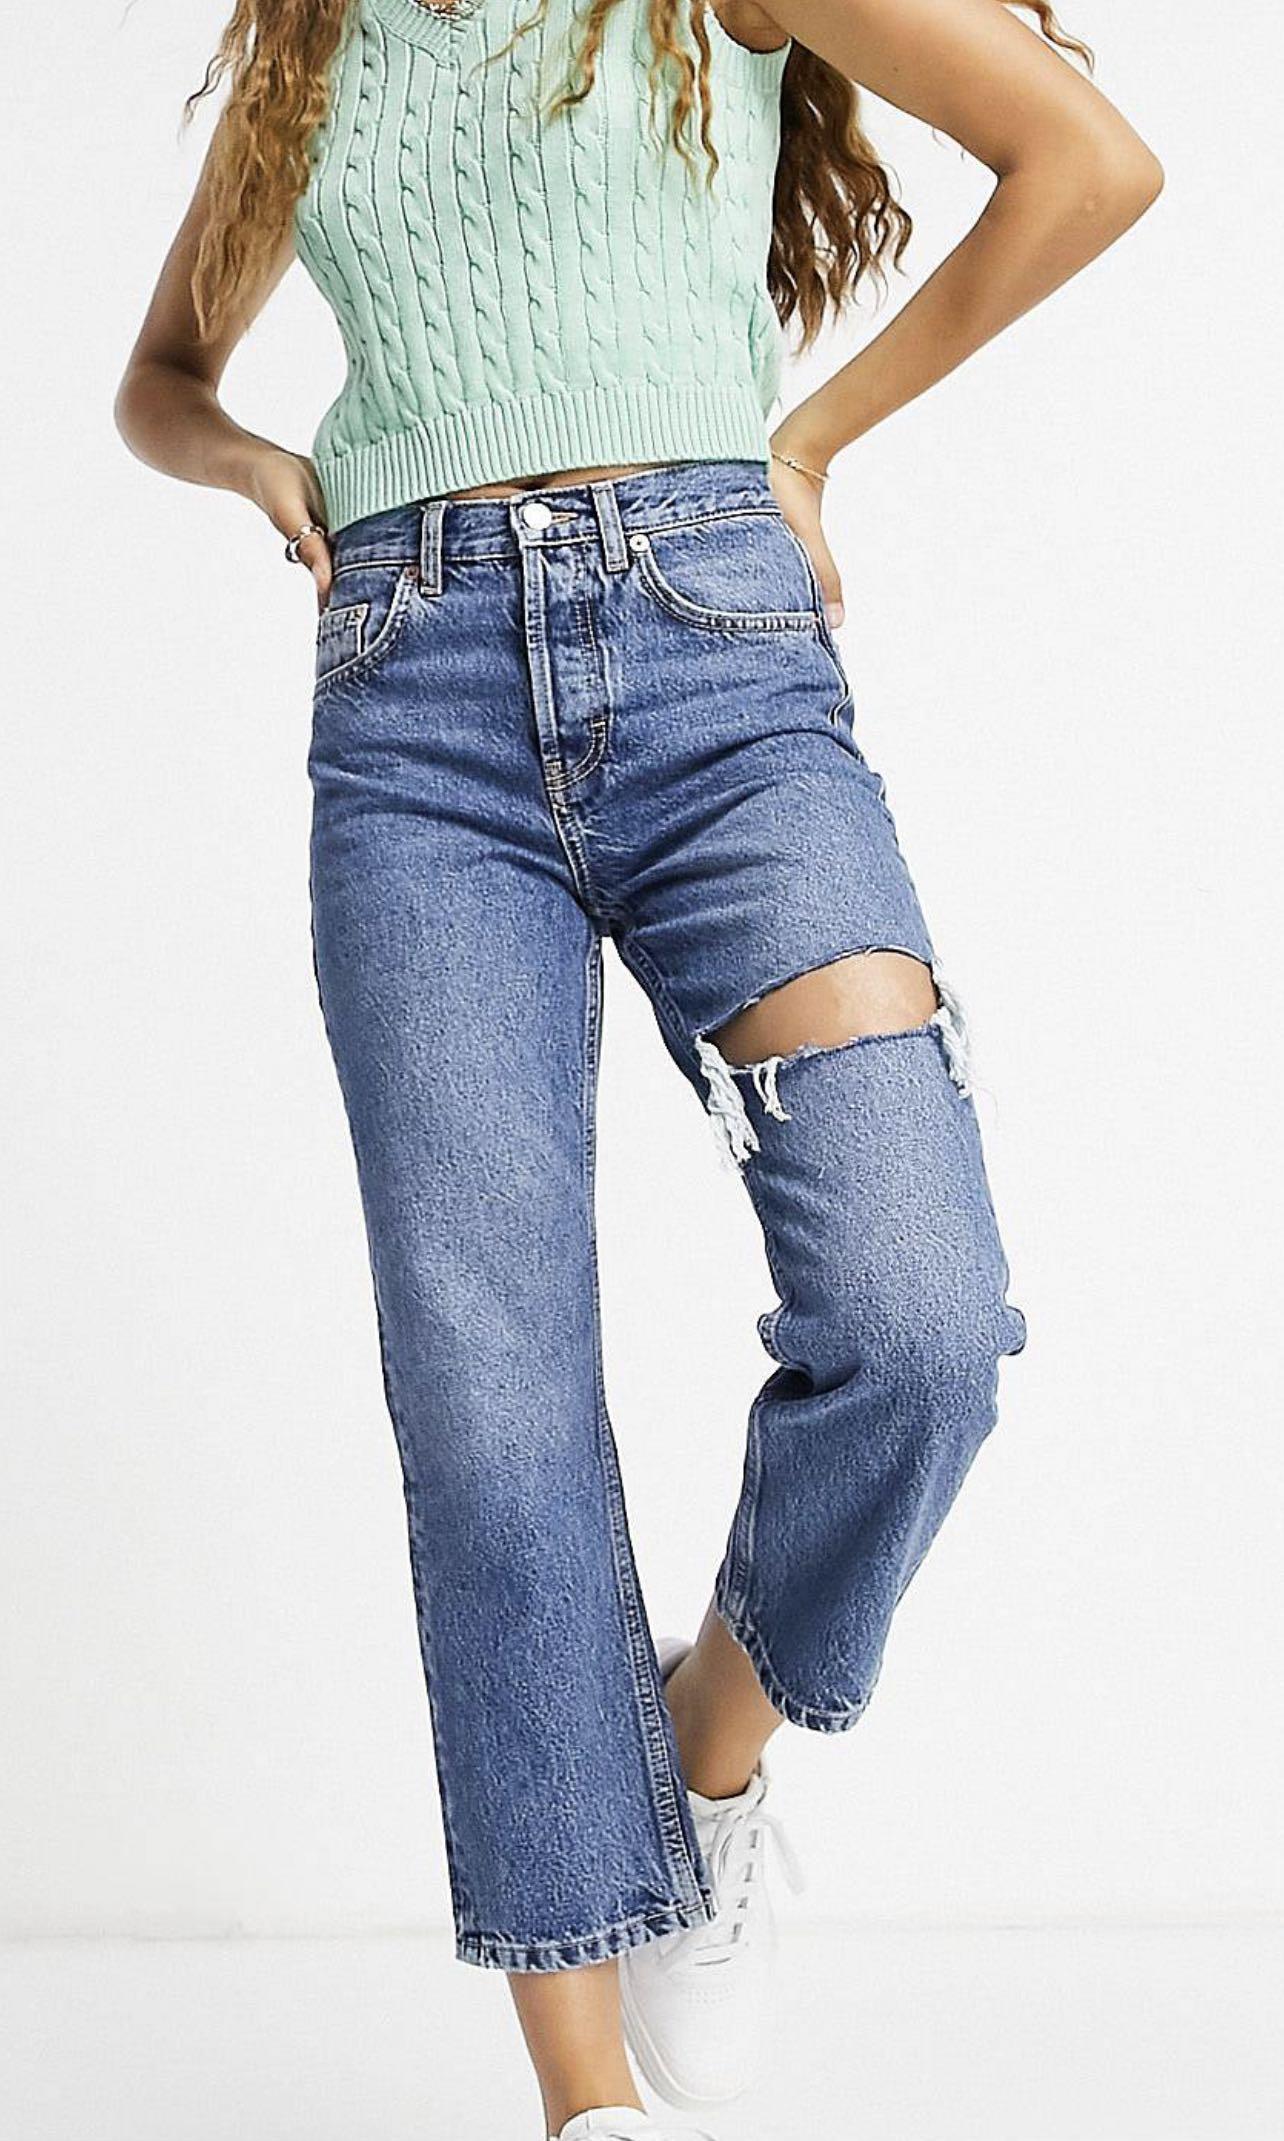 Topshop petite mid blue thigh rip editor jeans, Women's Fashion